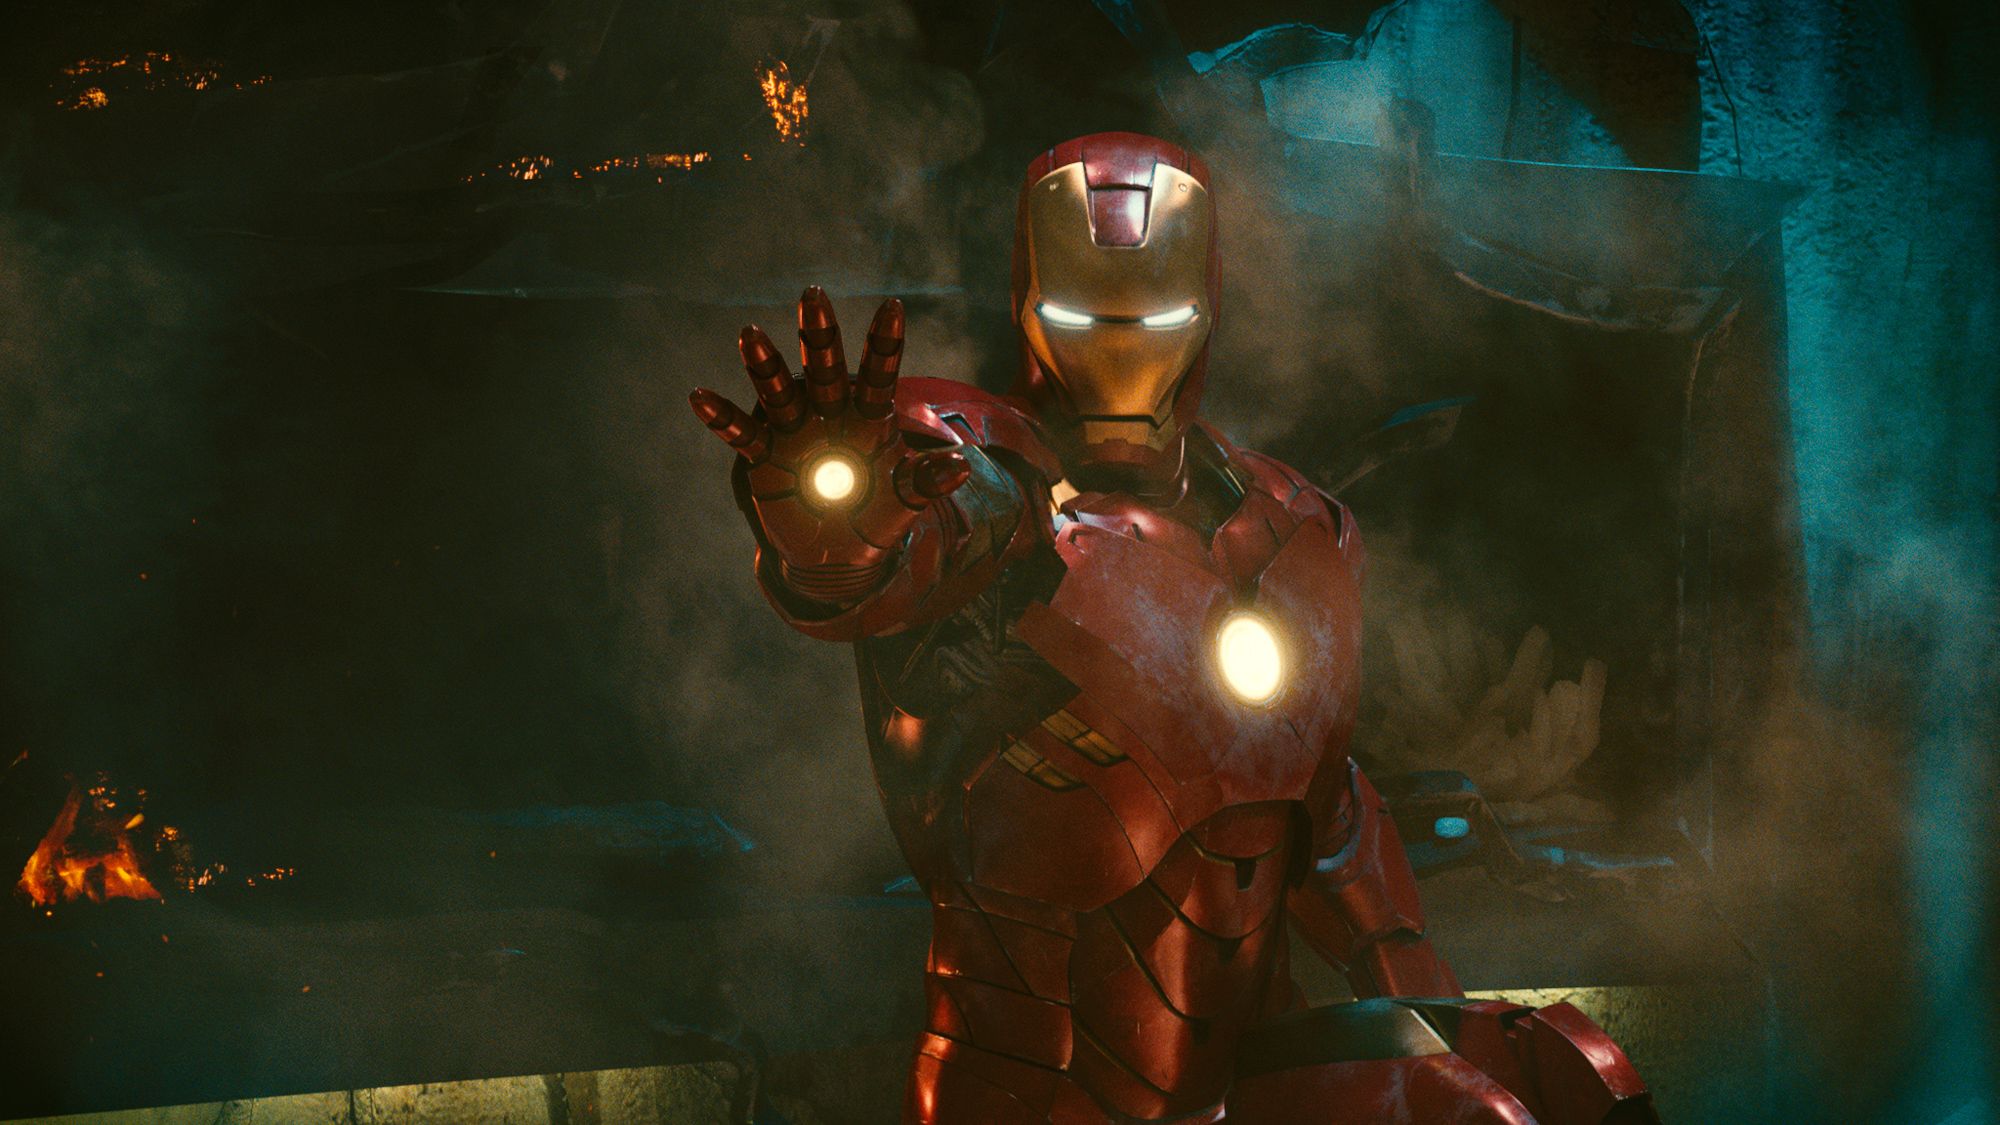 Robert Downey Jr. stars as Iron Man